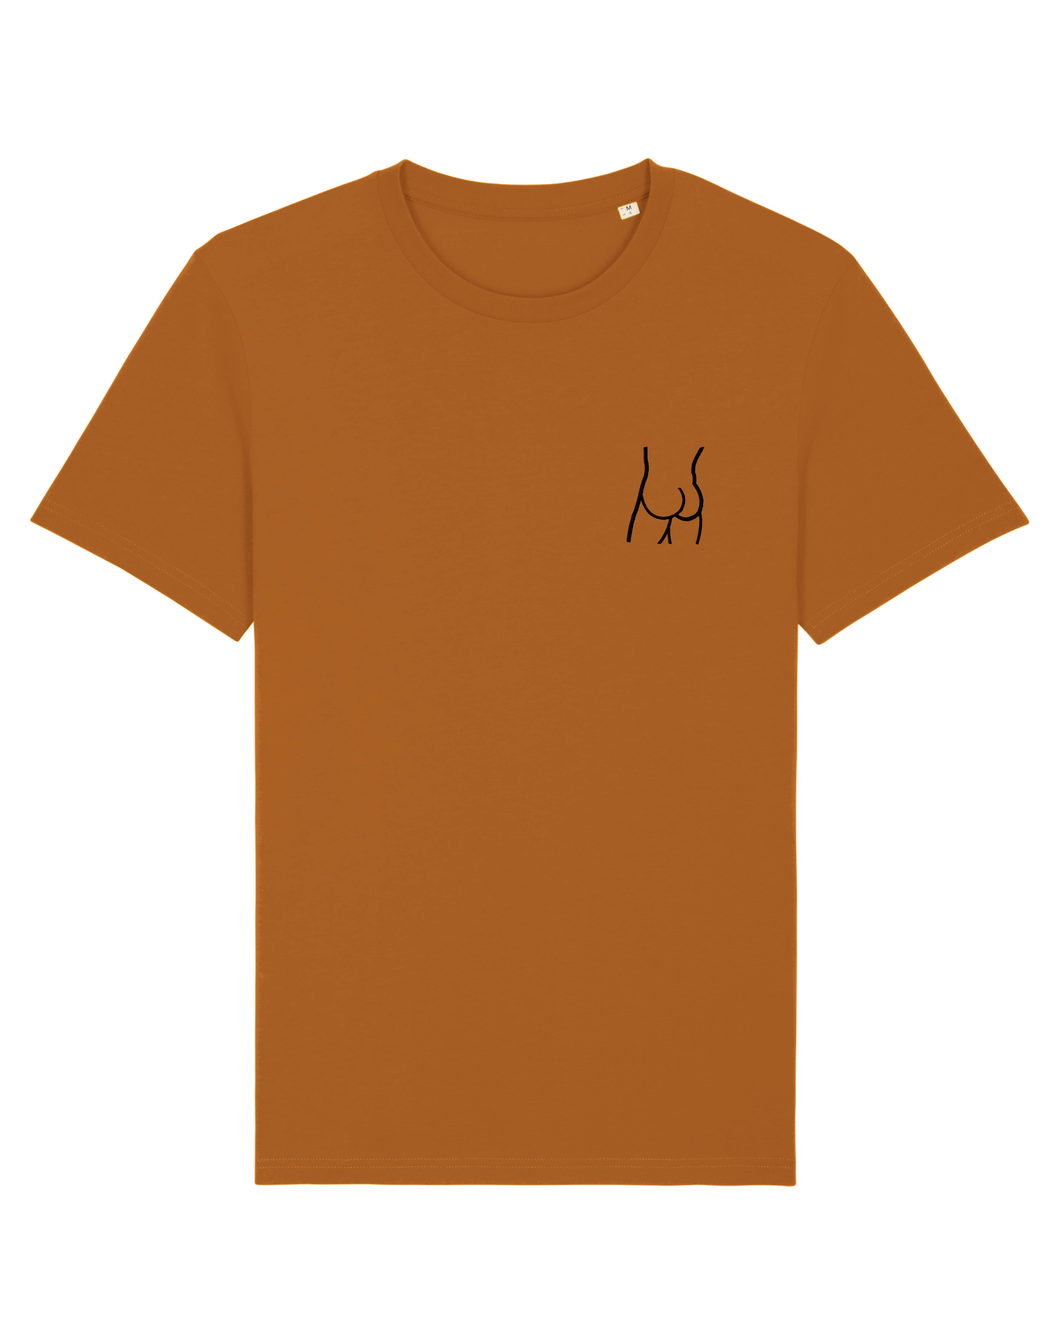 Butt - T-Shirt - Roasted Orange